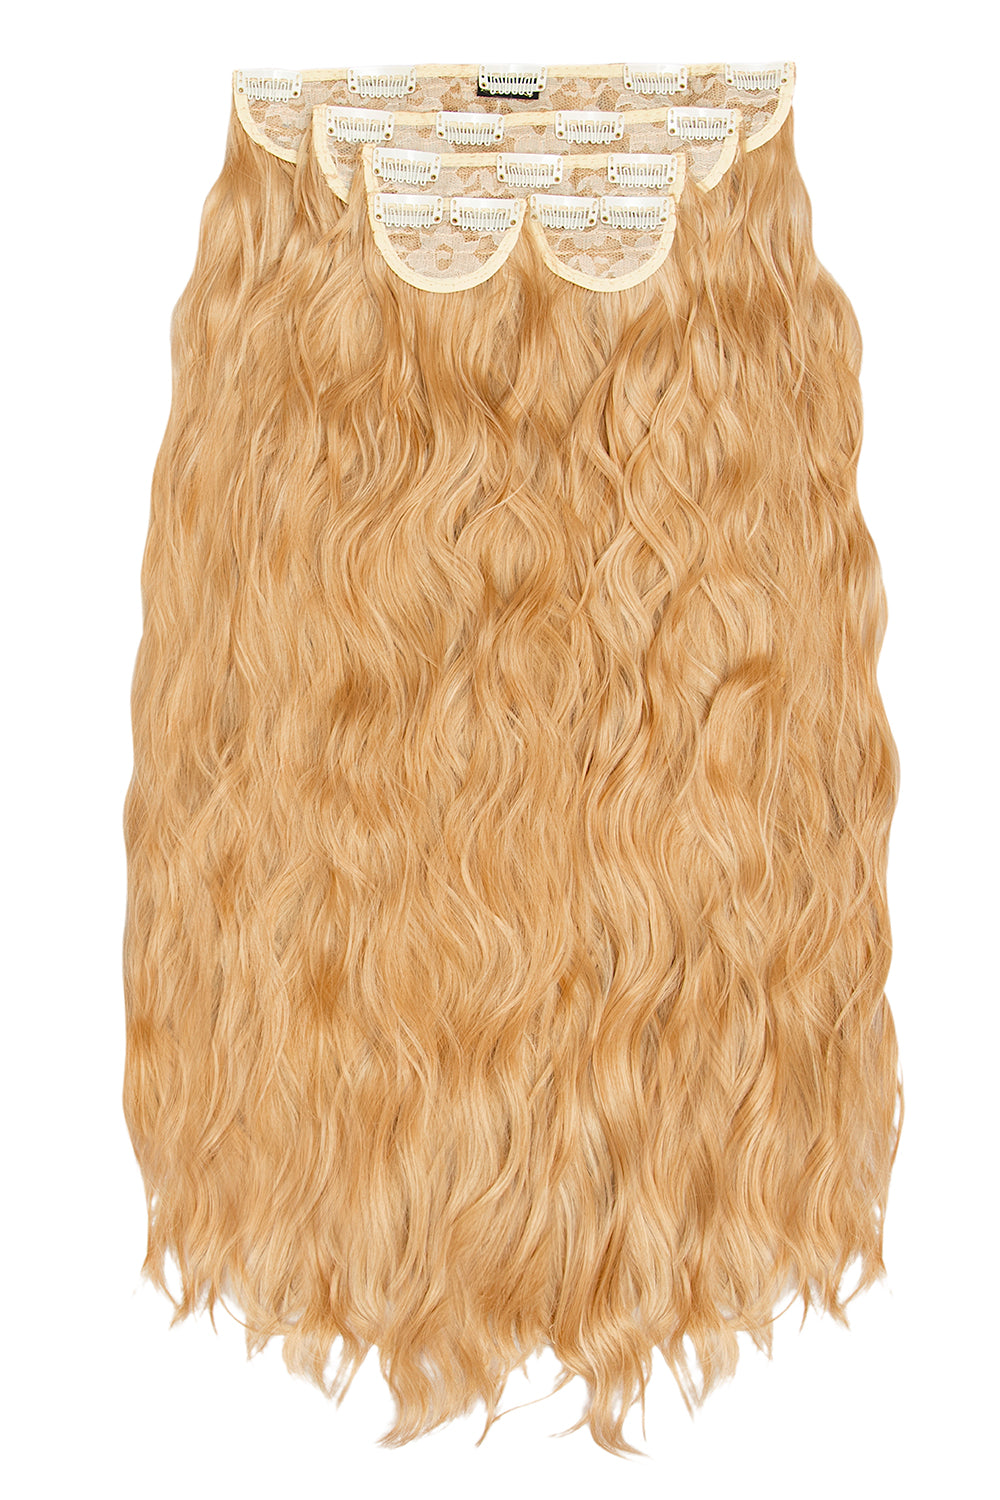 Super Thick 26" 5 Piece Waist Length Wave Clip In Hair Extensions - LullaBellz  - Caramel Blonde Festival Hair Inspiration